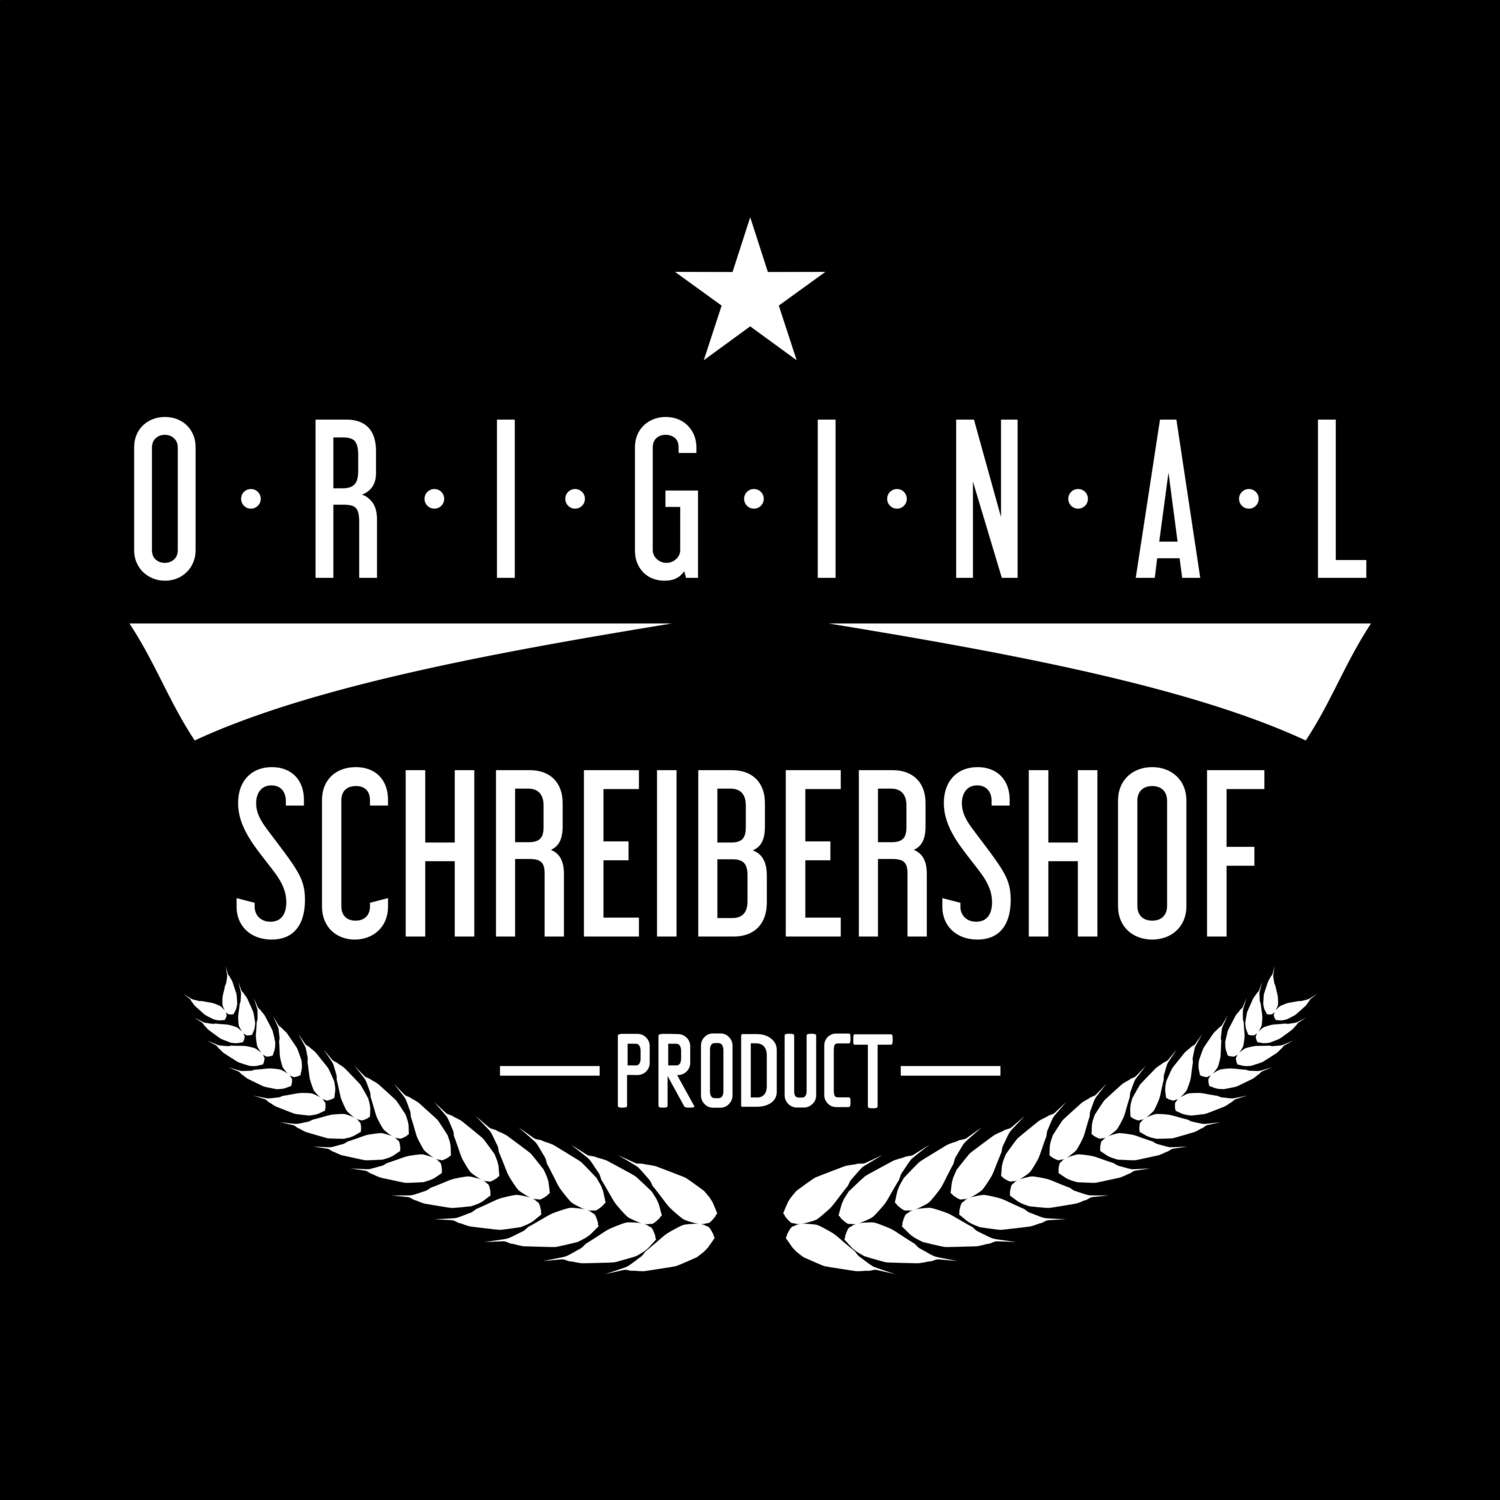 Schreibershof T-Shirt »Original Product«